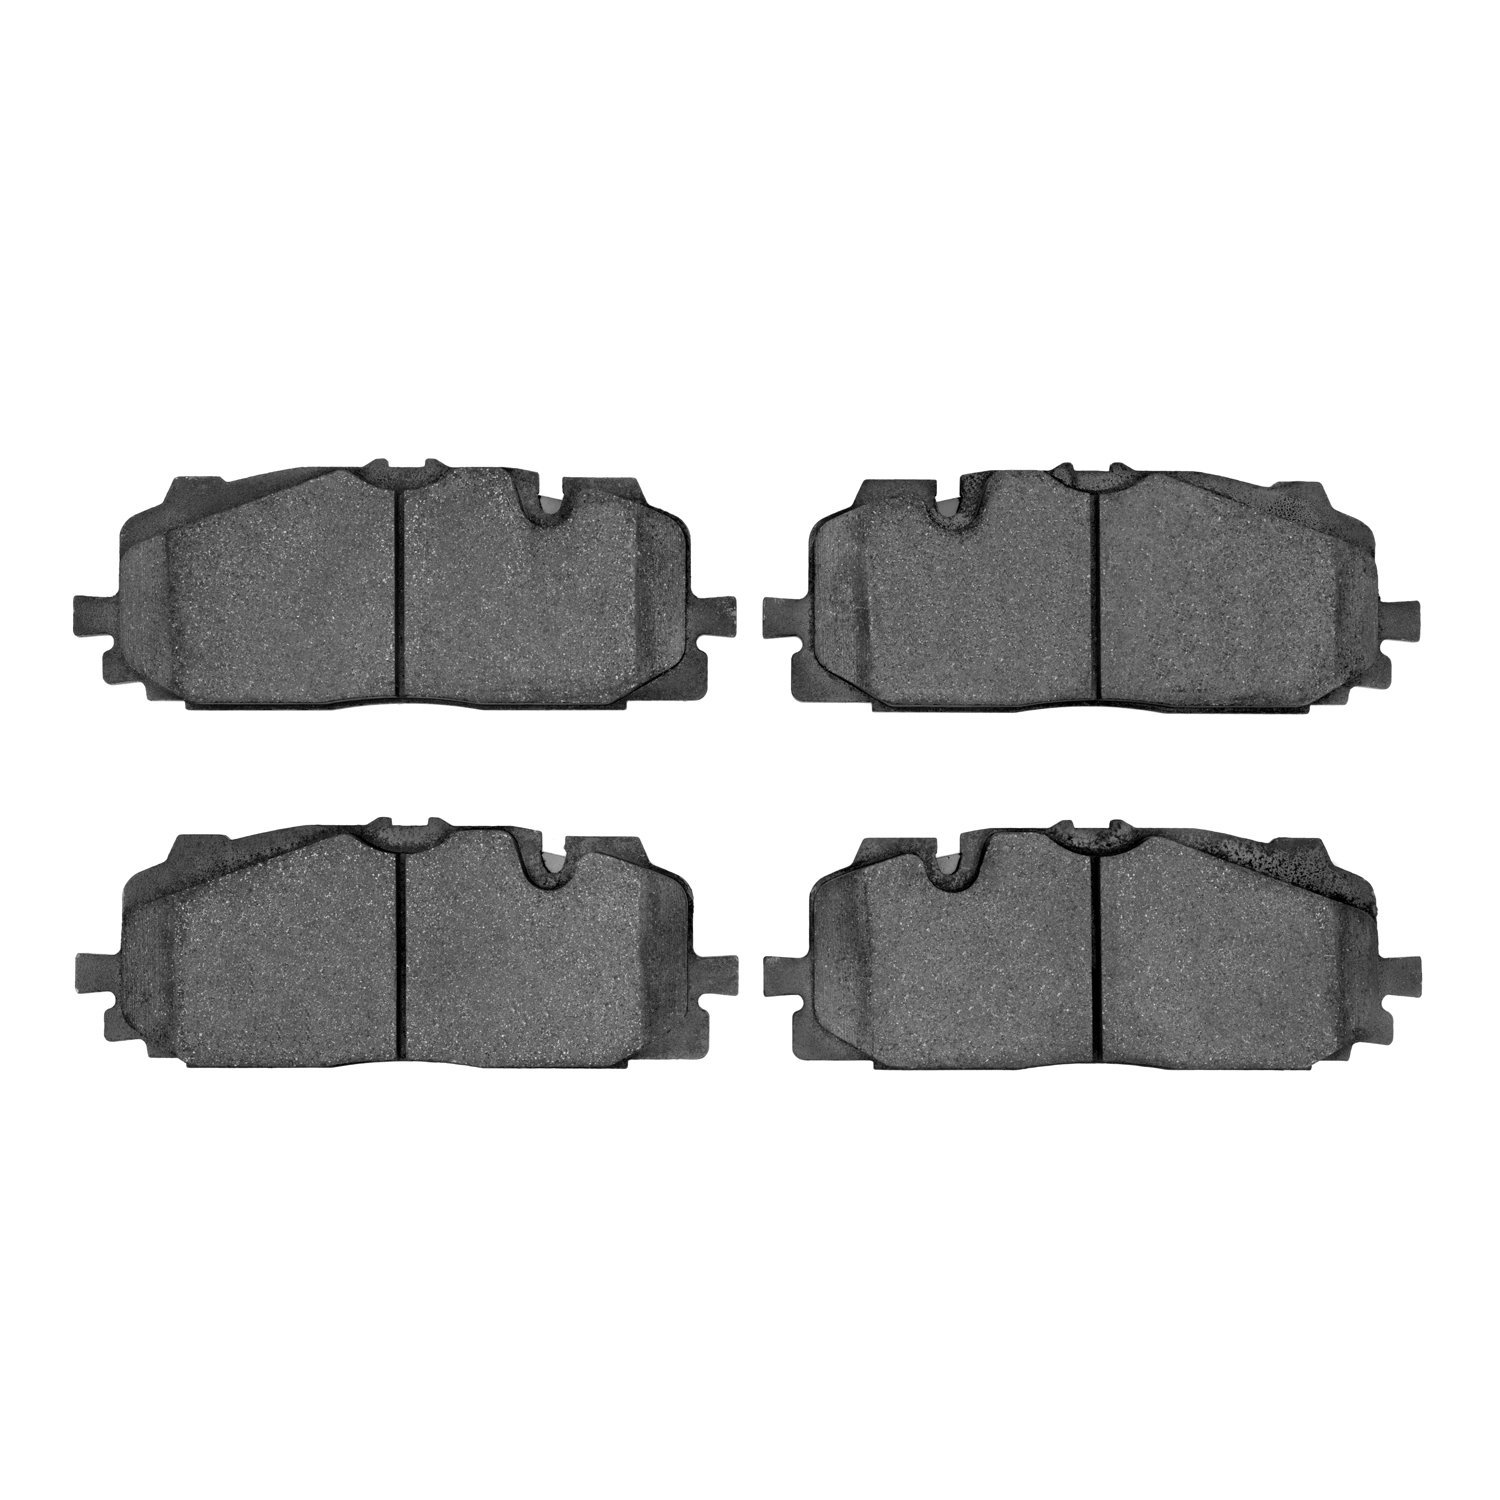 1310-1894-00 3000-Series Ceramic Brake Pads, Fits Select Audi/Volkswagen, Position: Front